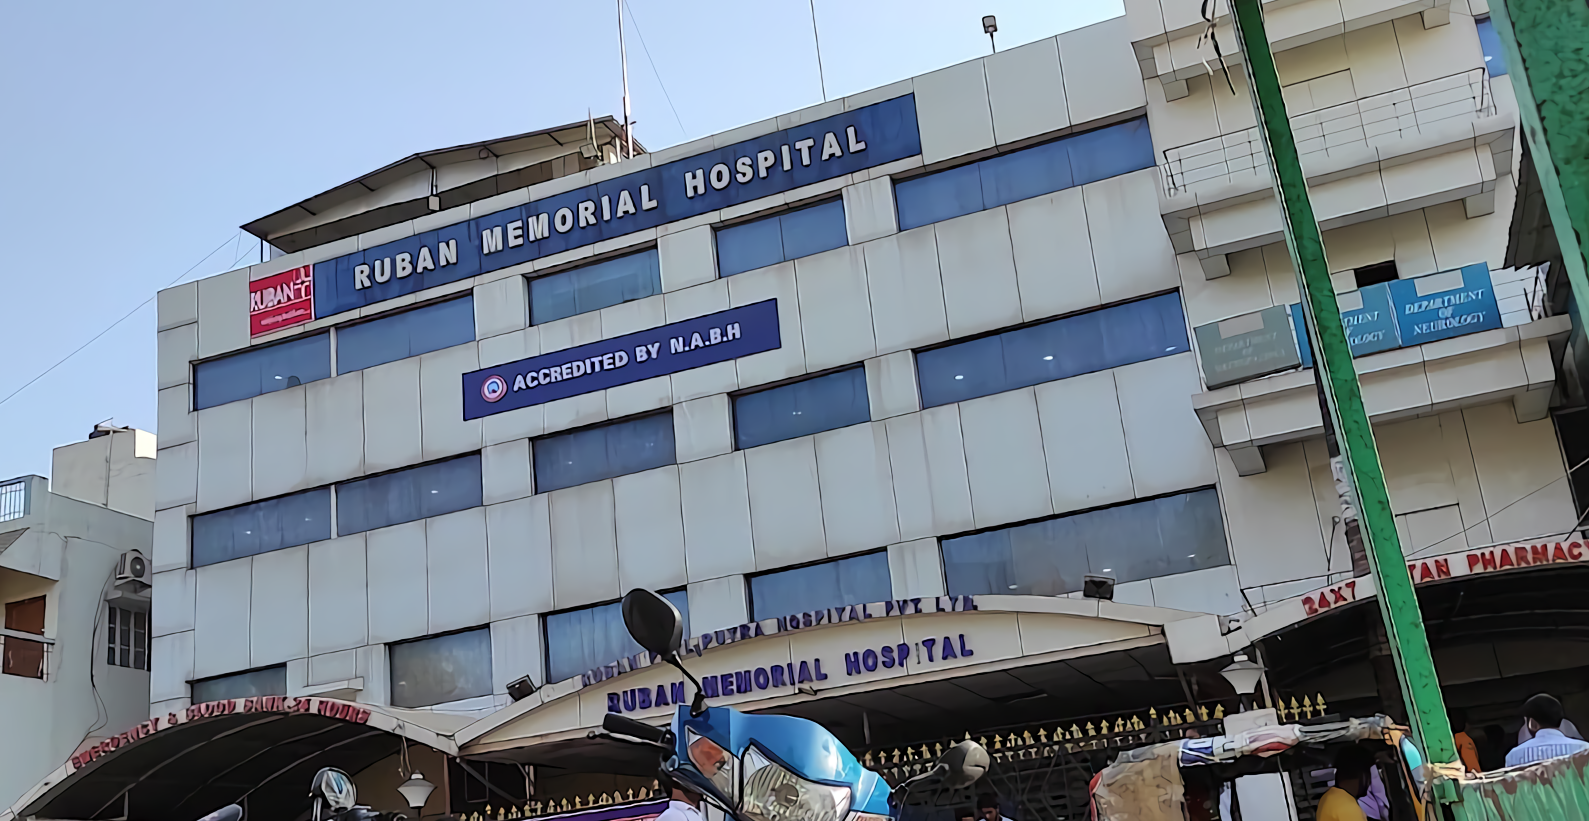 Ruban Memorial Hospital